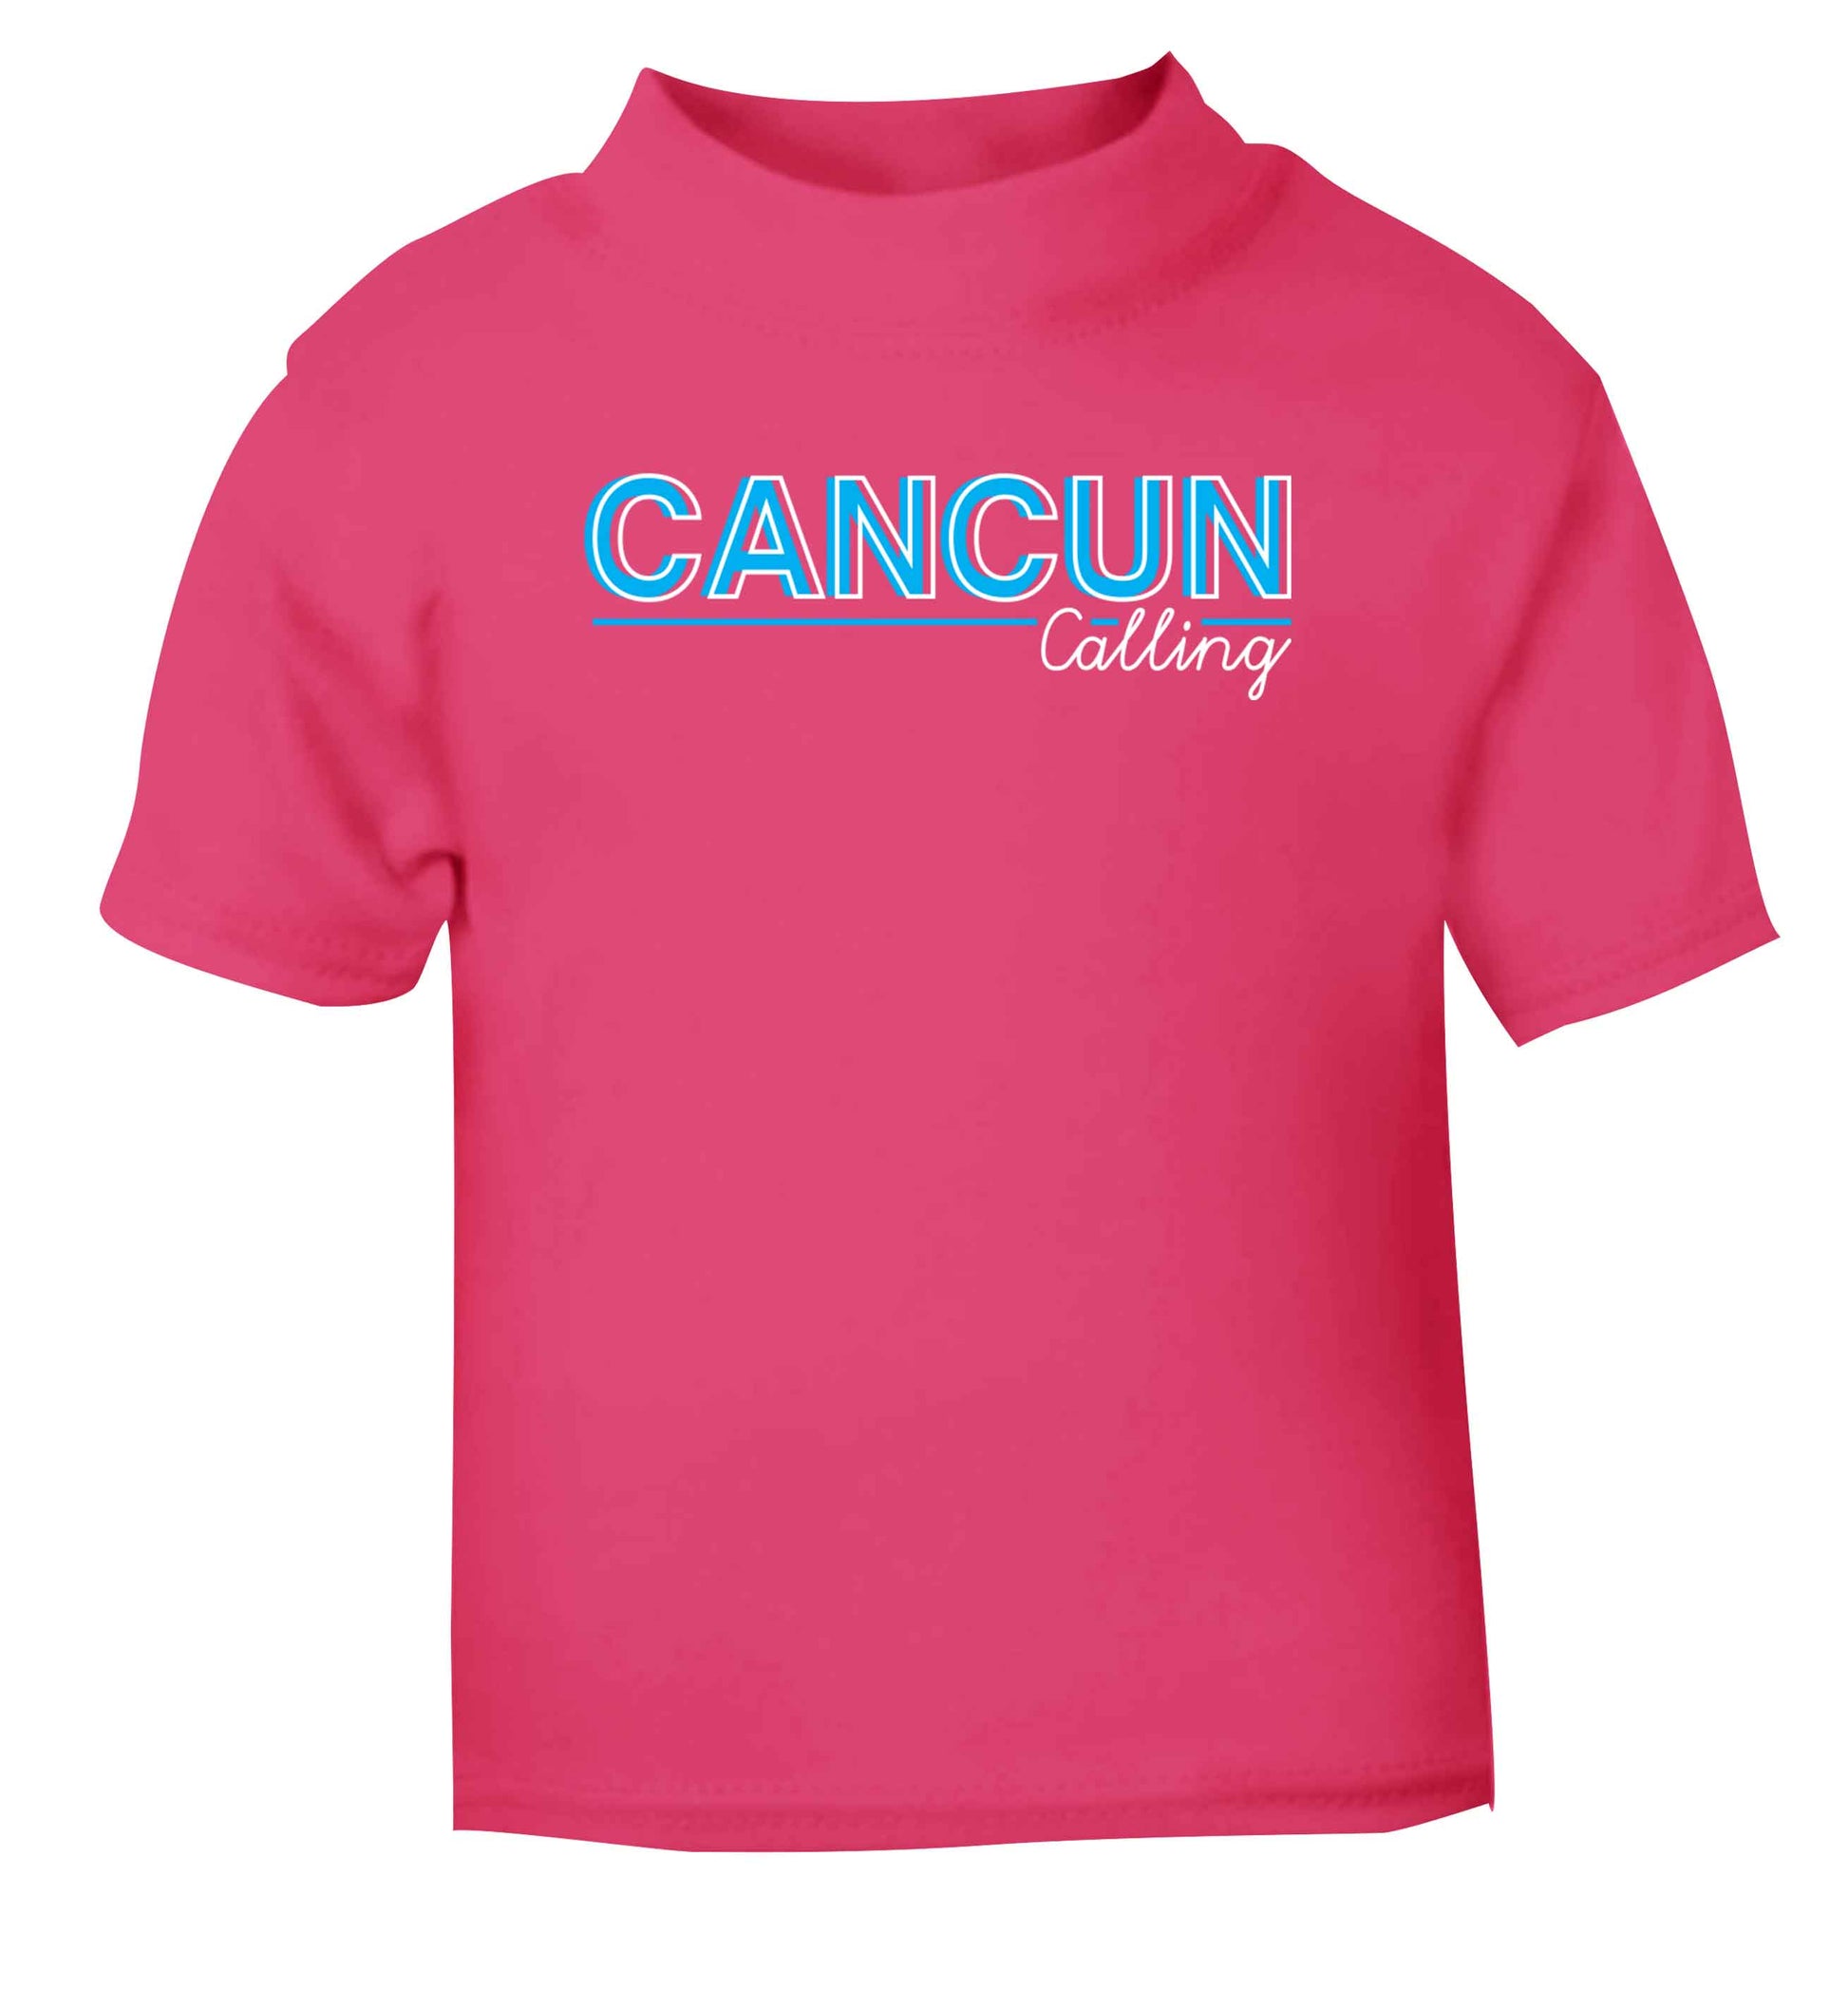 Cancun calling pink Baby Toddler Tshirt 2 Years